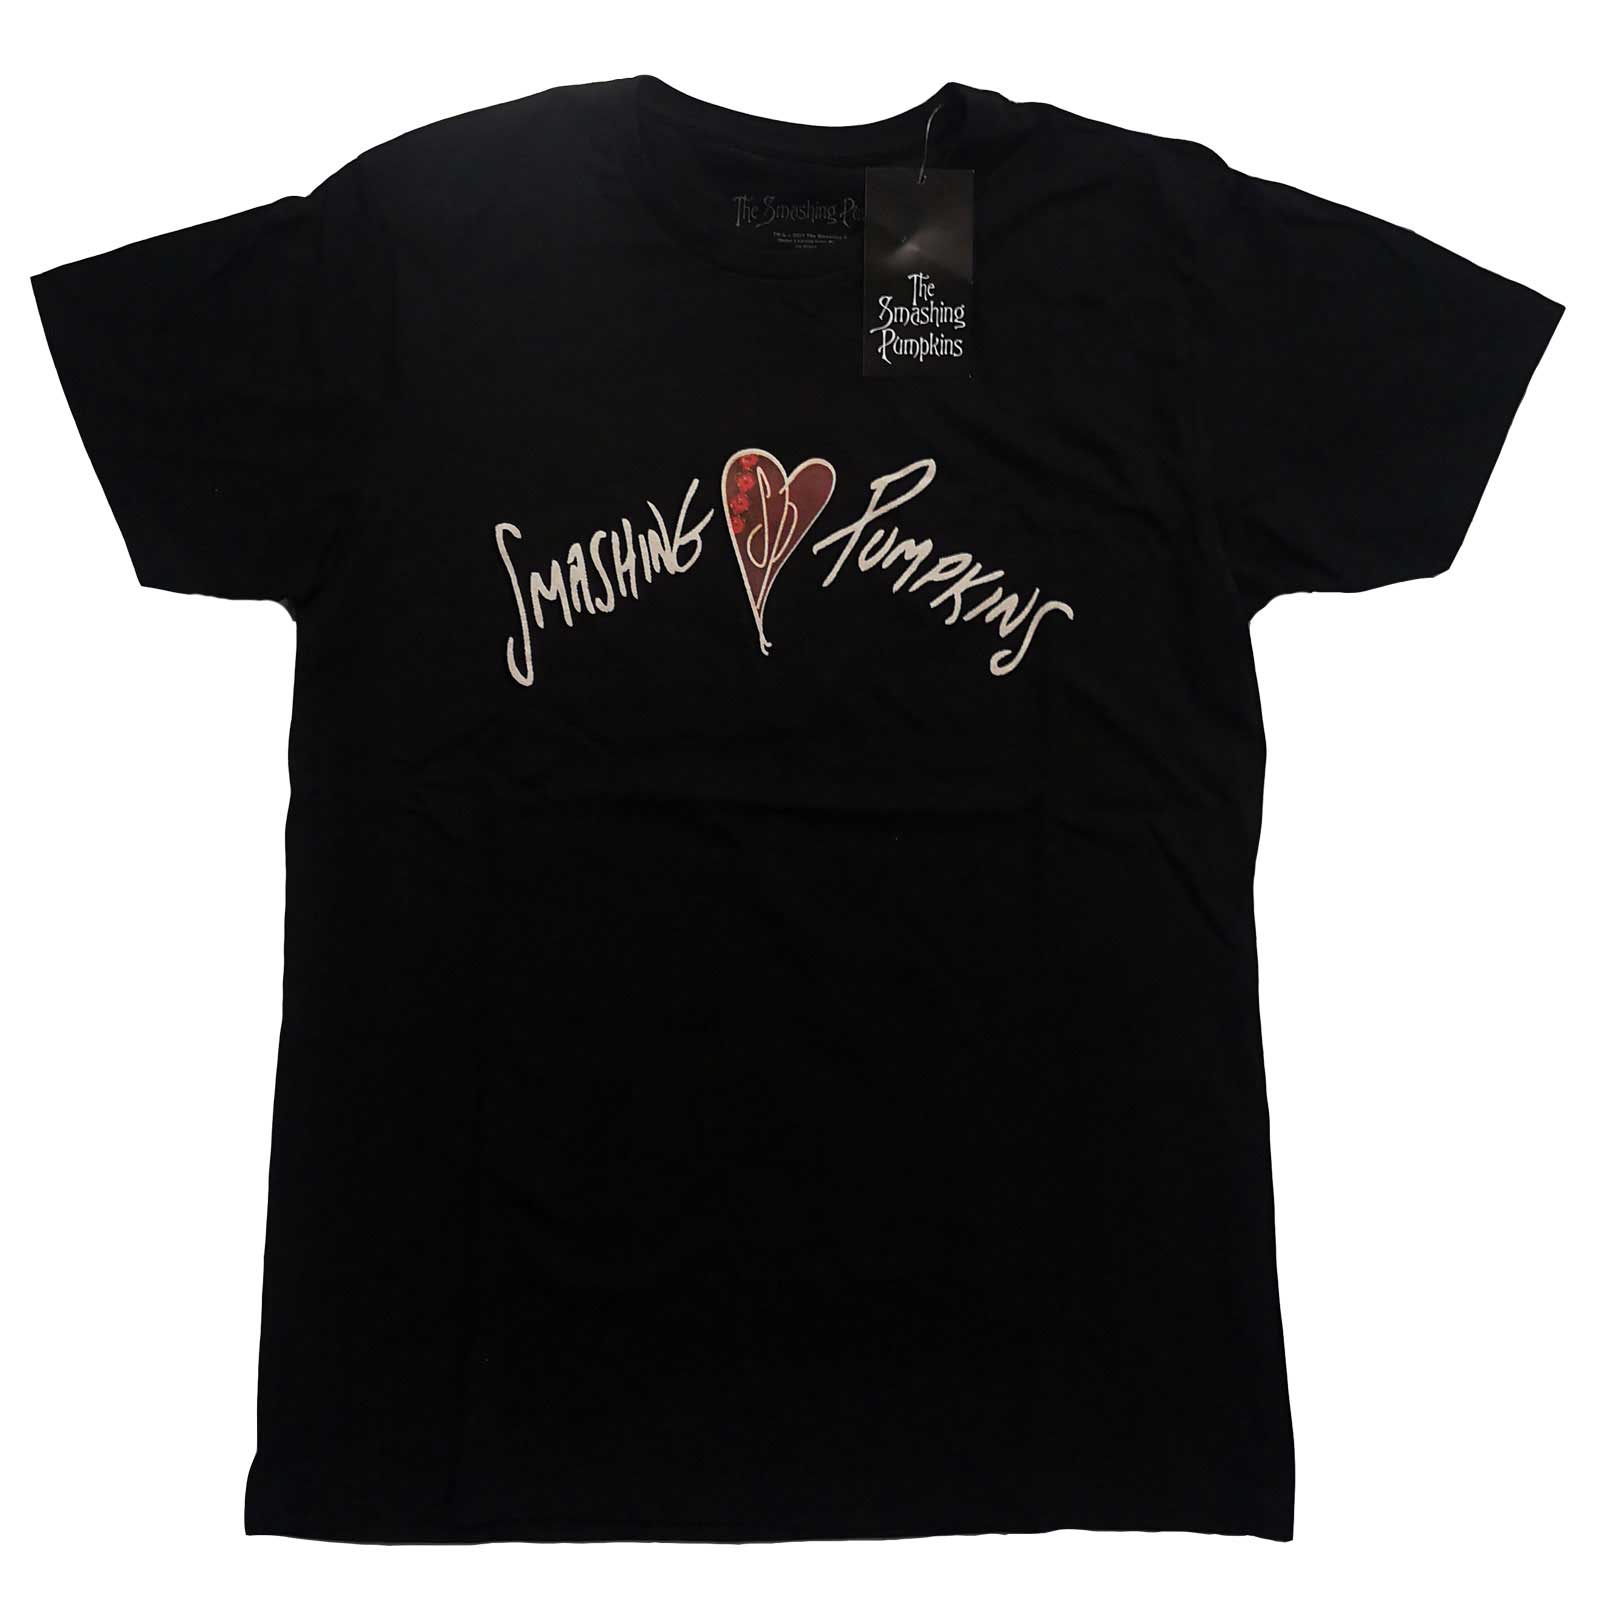 The Smashing Pumpkins T-Shirt - Gish Heart (Unisex)